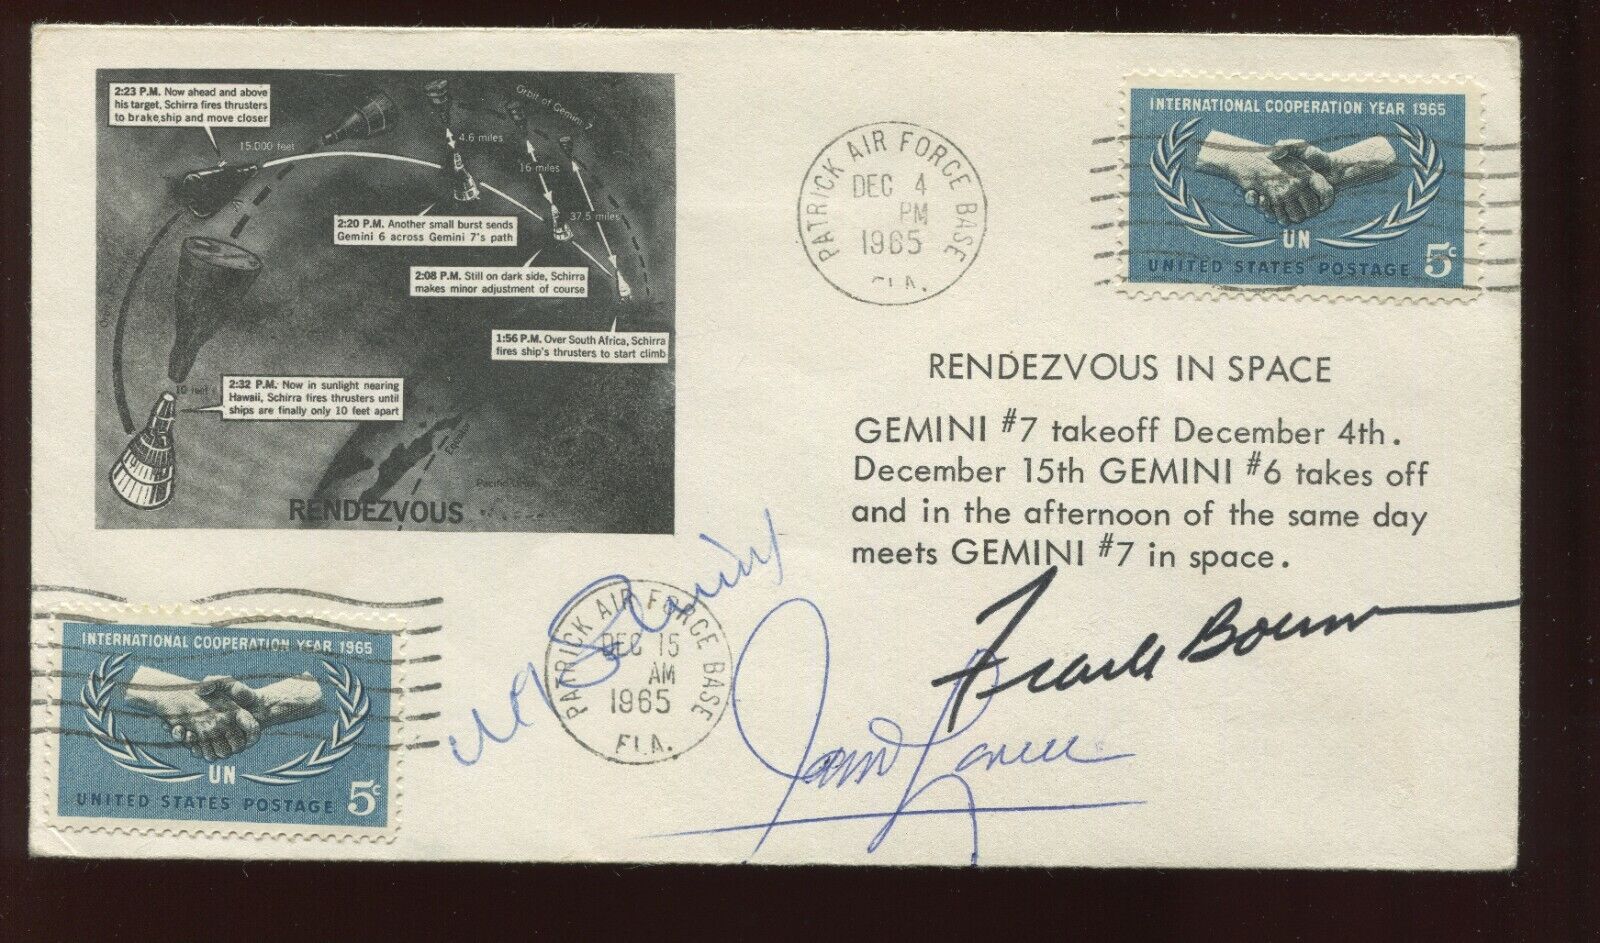 NASA ASTRONAUTS BORMAN, LOVELL & SCHIRRA SIGNED 1965 GEMINI 6/7 RENDEZVOUS COVER